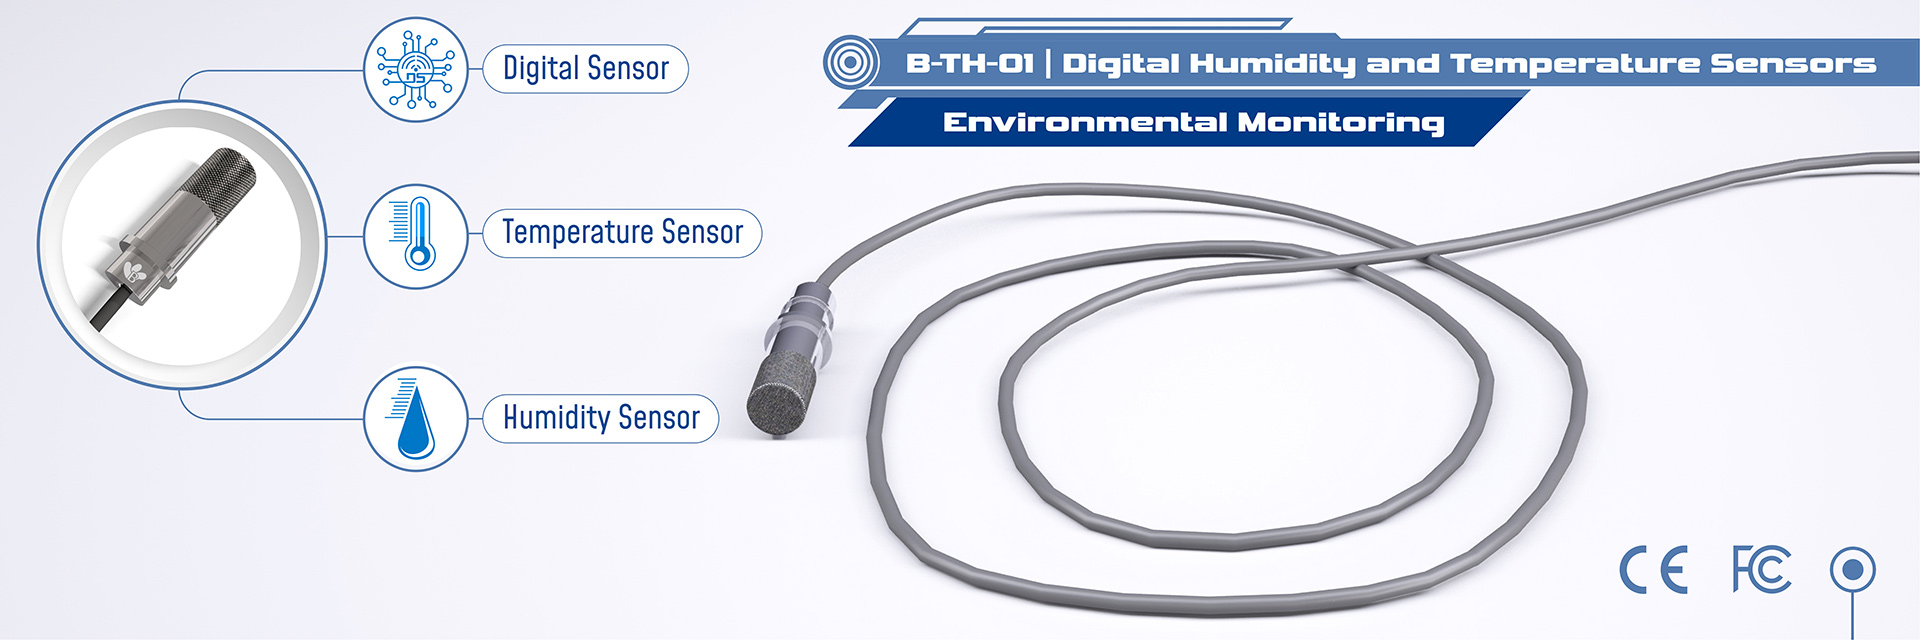 « B-TH-01 Digital humidity and temperature sensors »